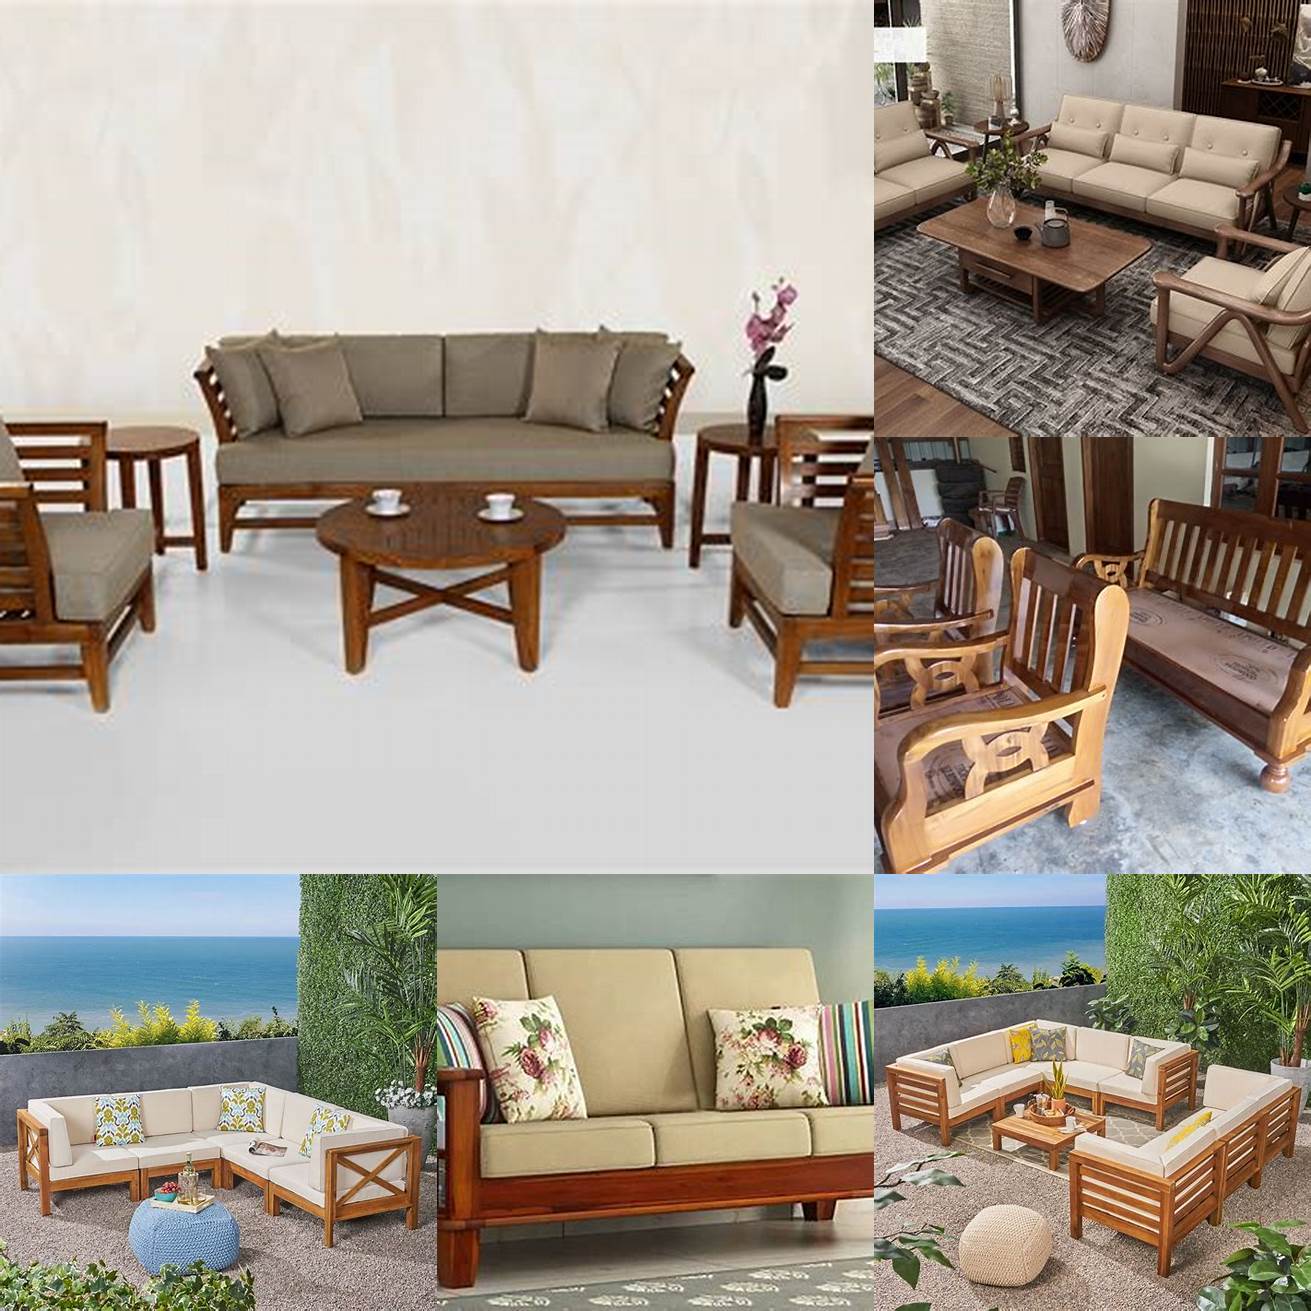 A teak wood sofa and table set